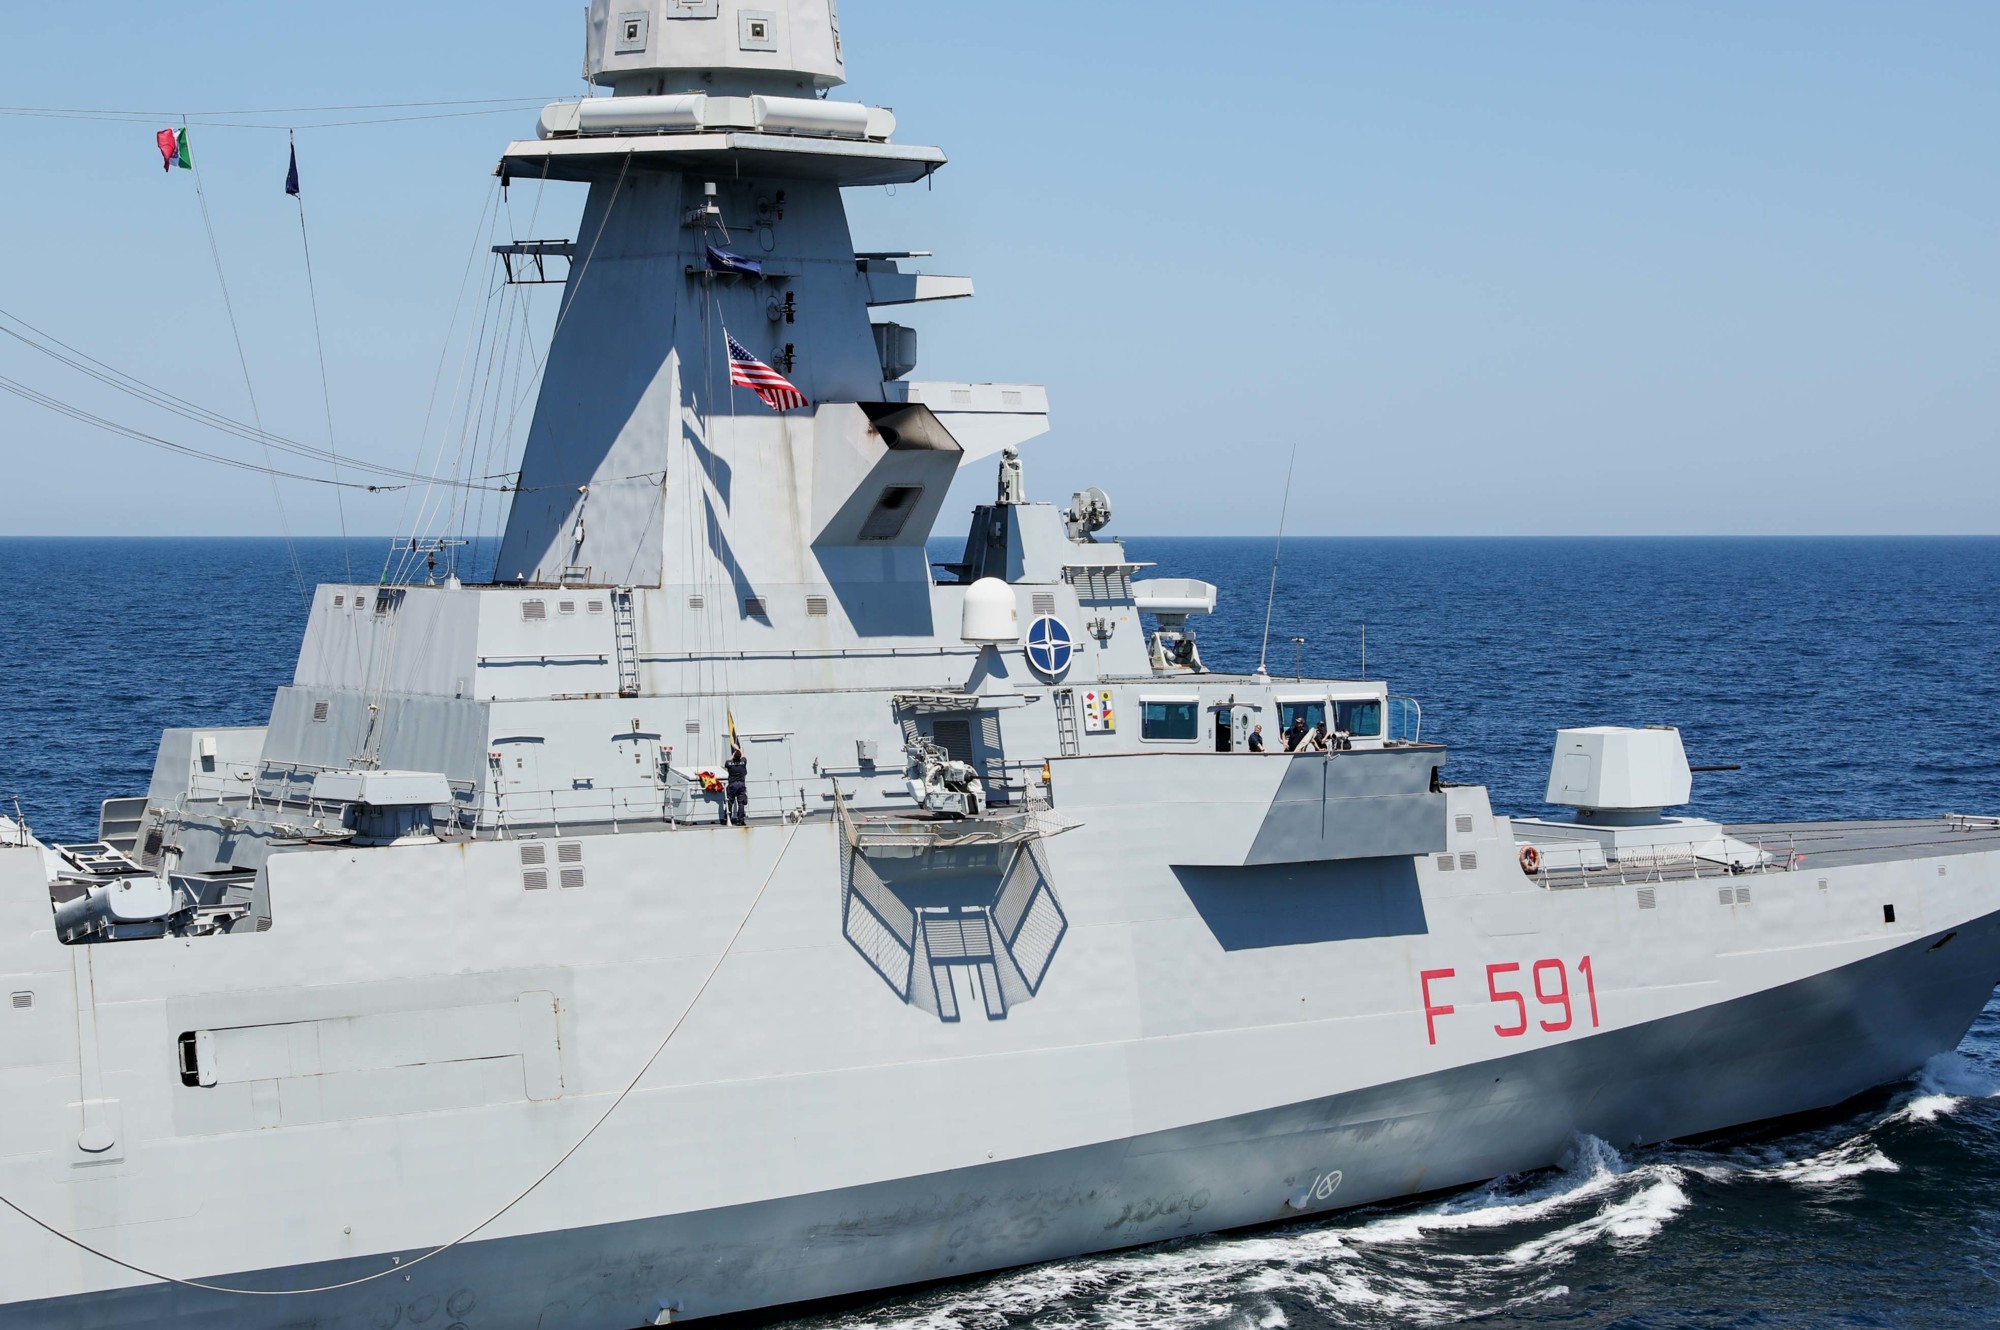 f-591 virginio fasan its nave bergamini fremm class guided missile frigate italian navy marina militare 62